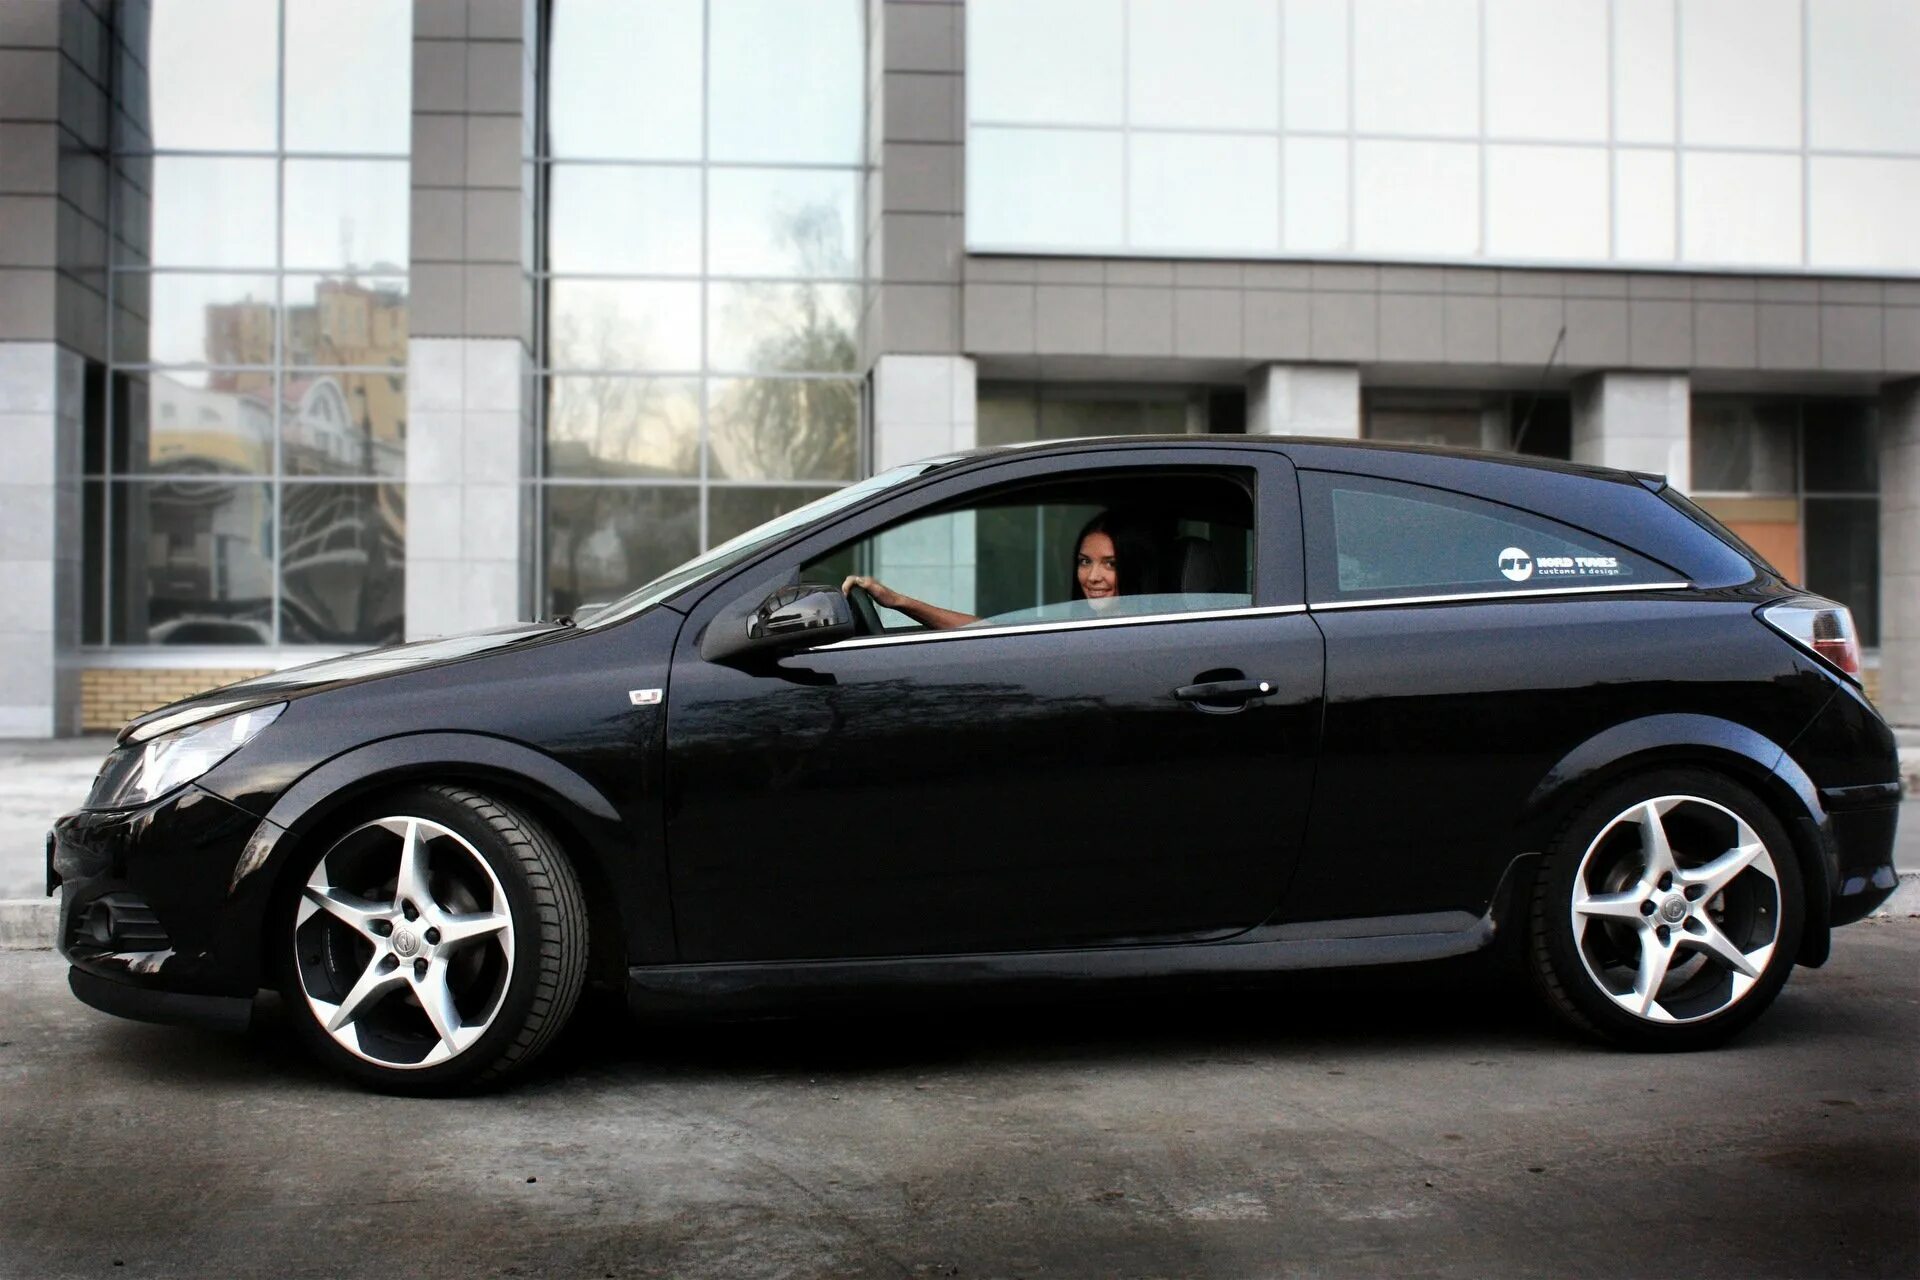 Opel Astra h GTC 2008. Opel Astra h GTC черная. Opel Astra GTC 2008. Опель хэтчбек тюнинг